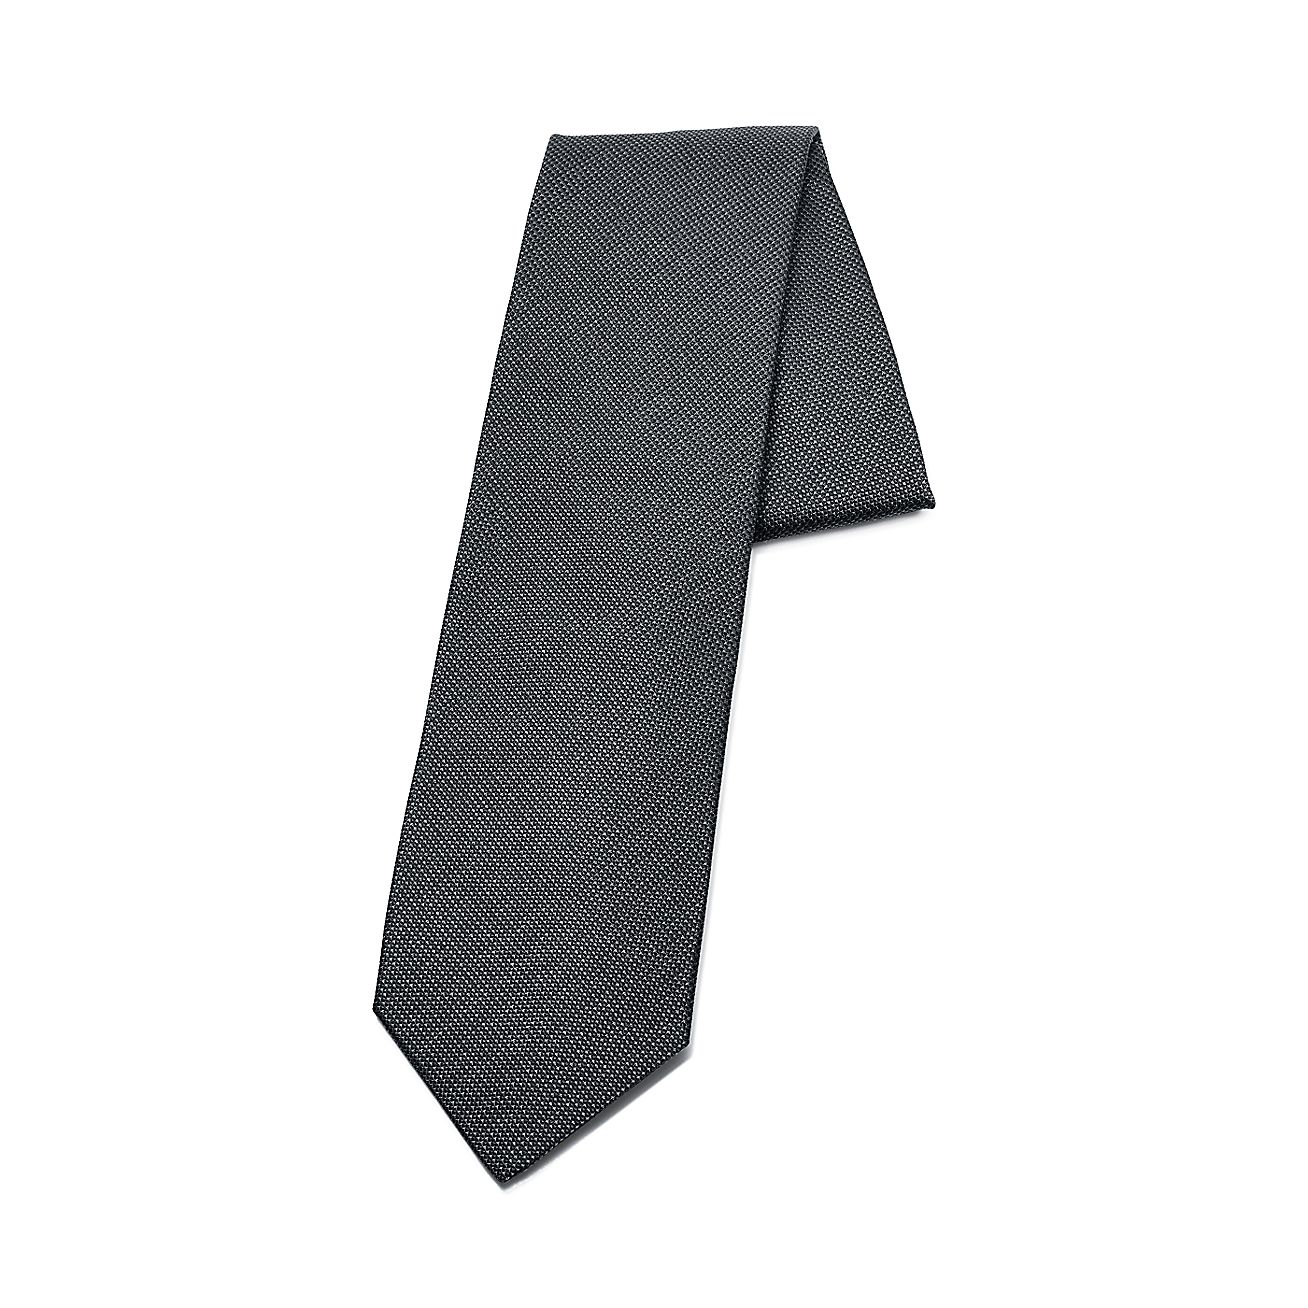 Diamond Point tie in titanium silk. | Tiffany & Co.